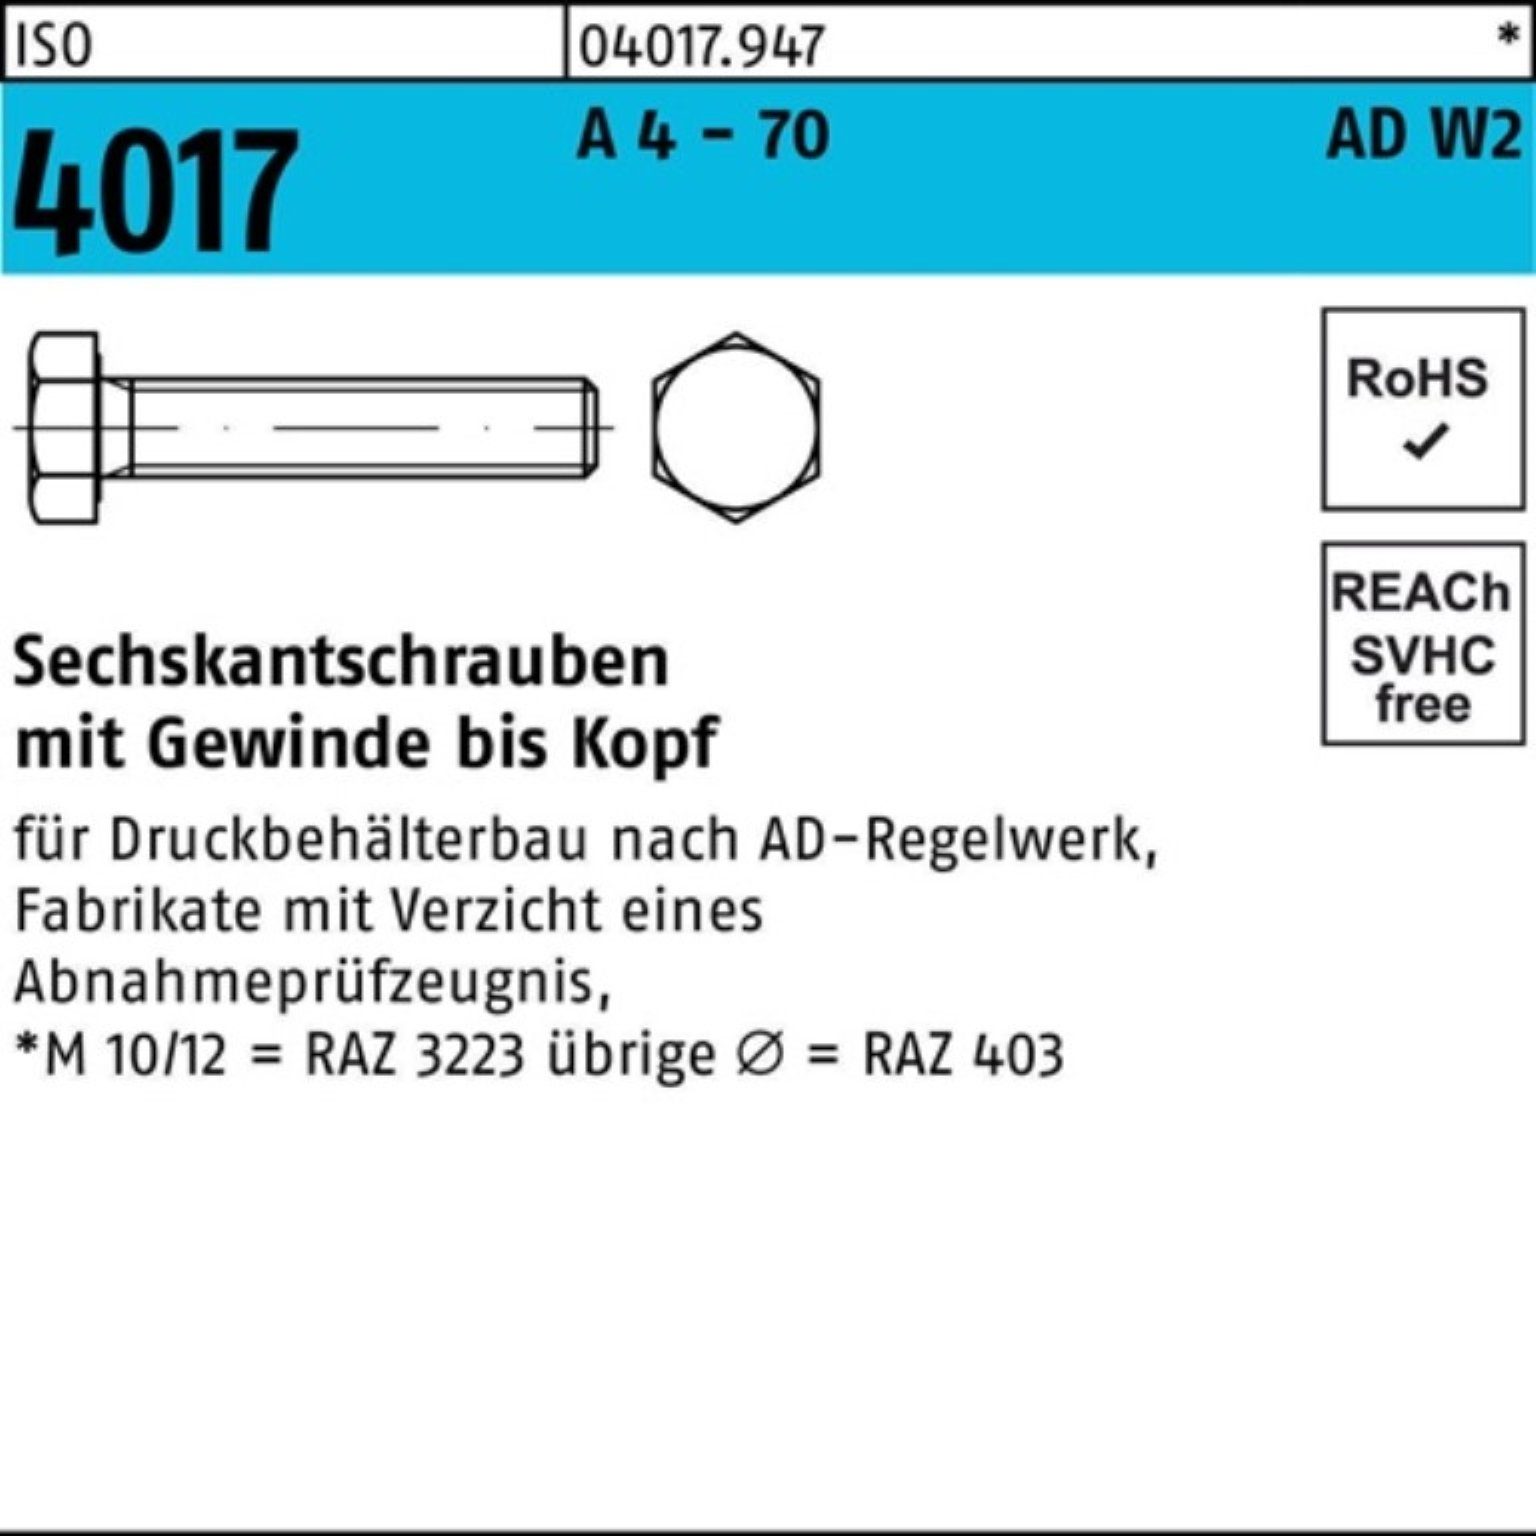 Bufab Sechskantschraube 100er Pack Sechskantschraube ISO 4017 VG M10x 20 A 4 - 70 AD-W2 100 St